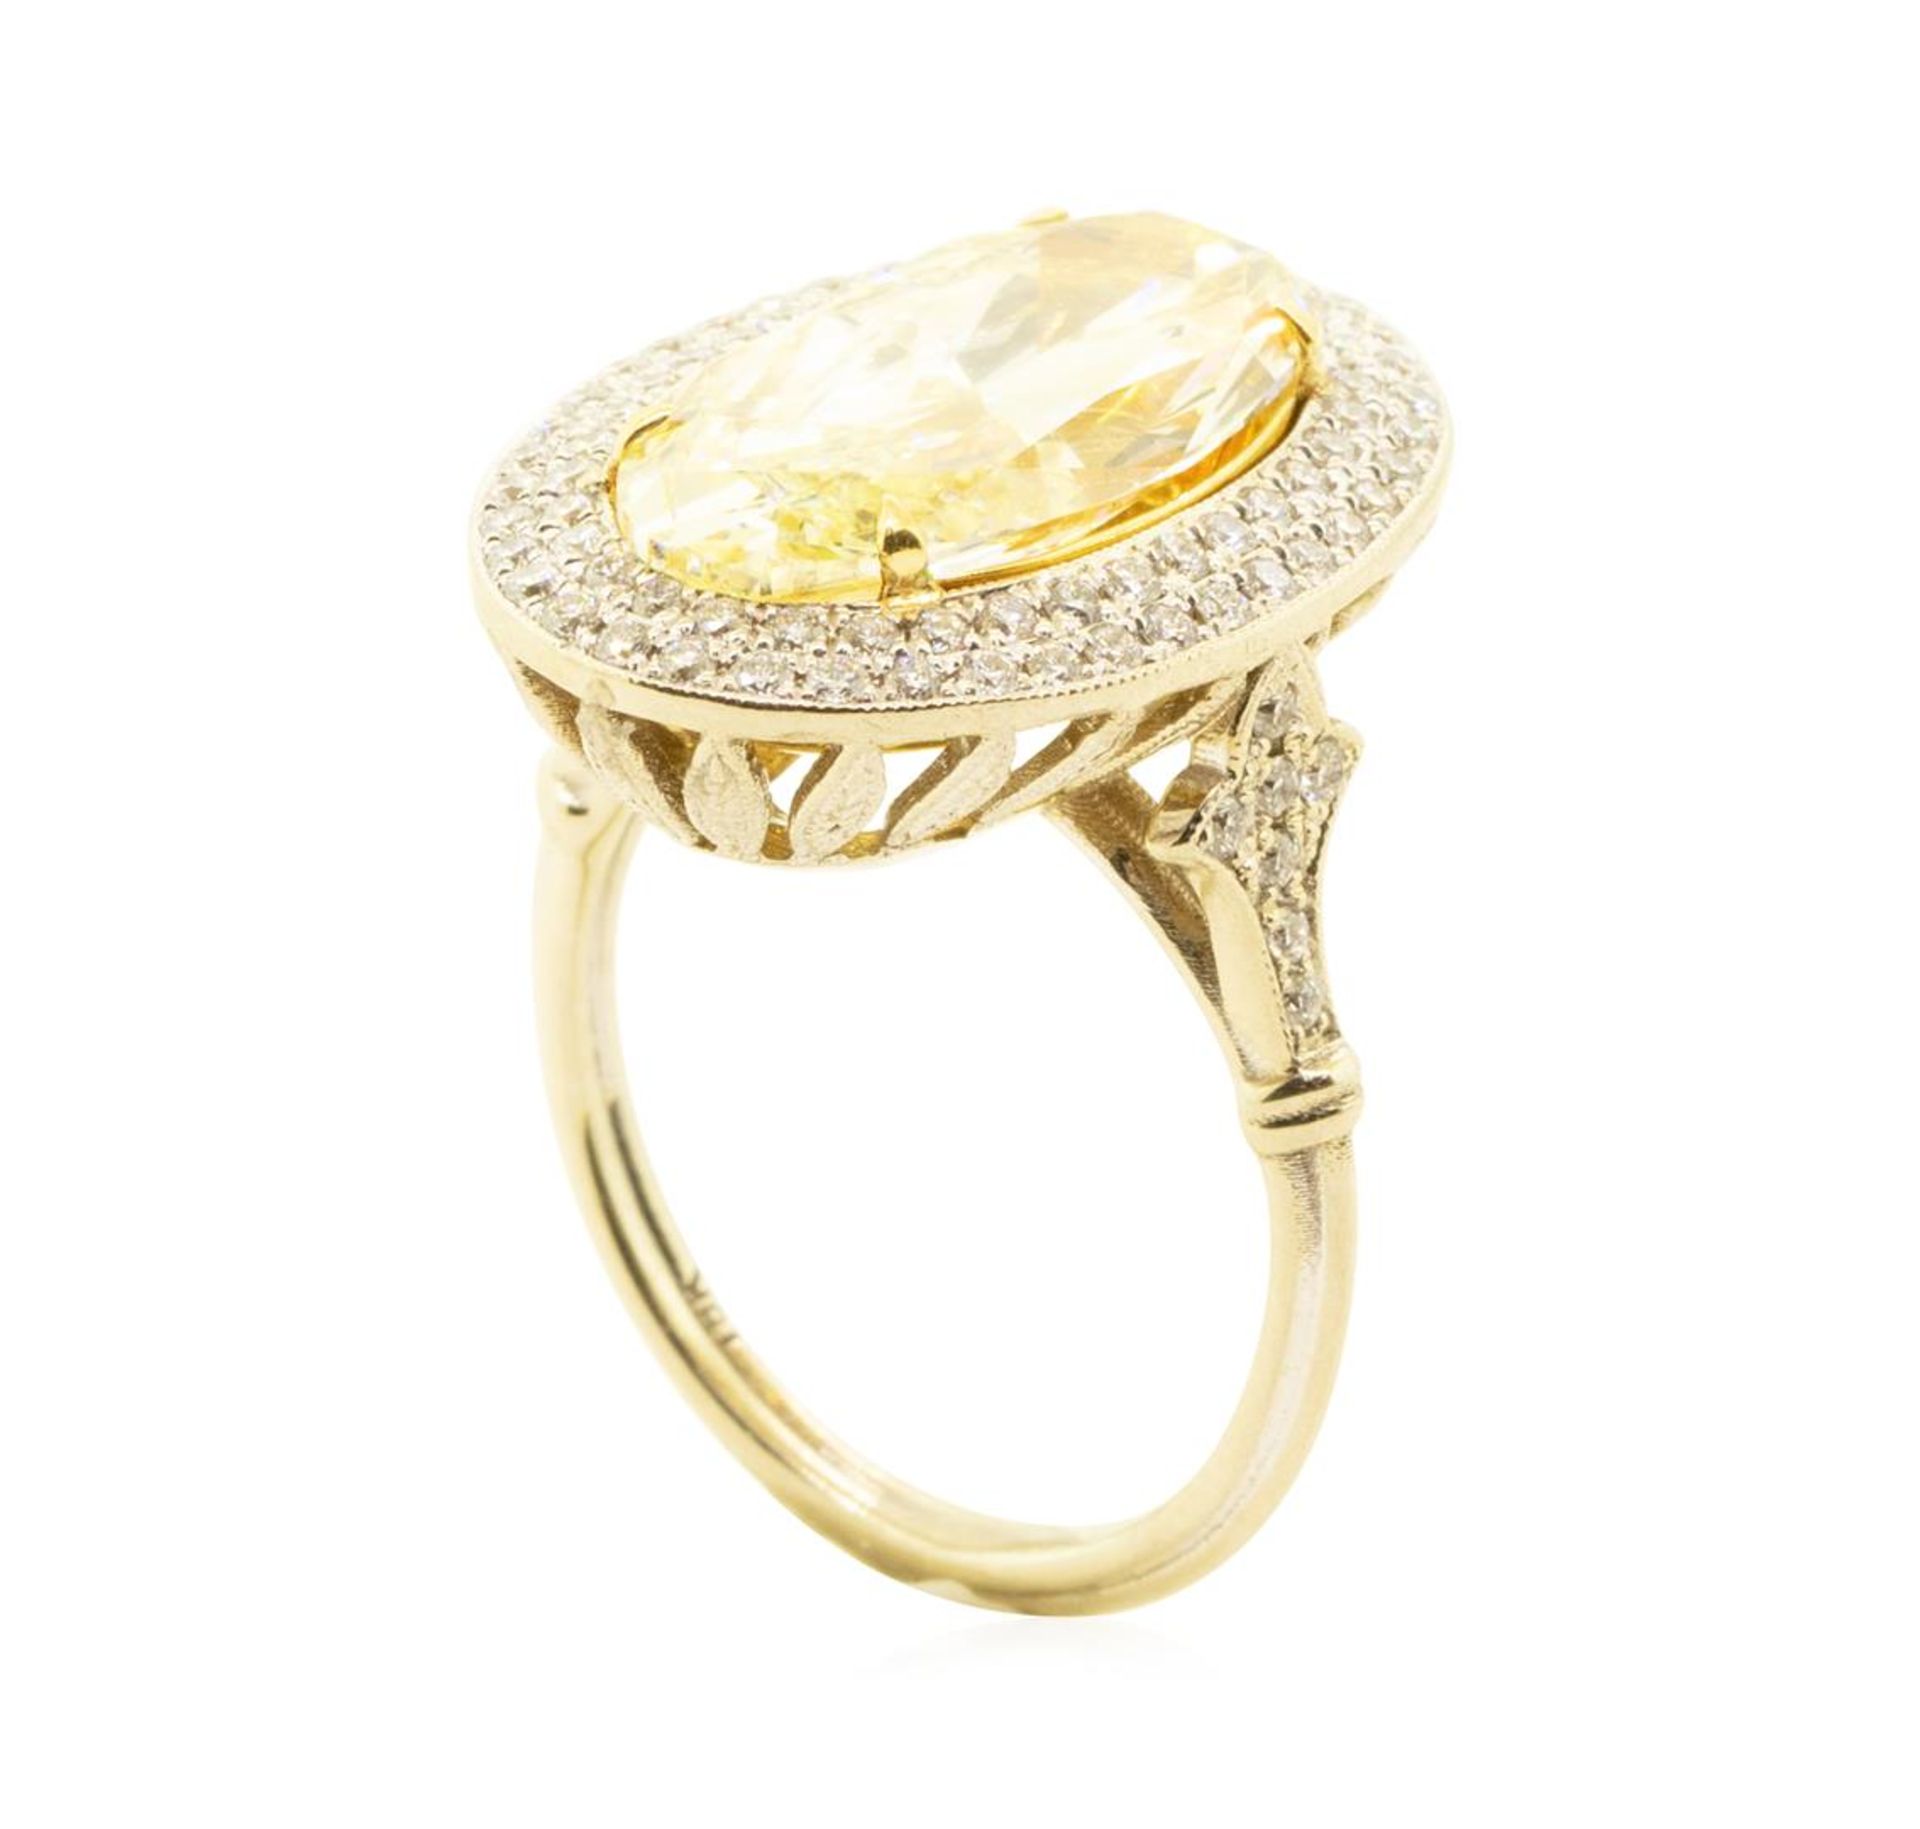 4.76 ctw Yellow Diamond Ring - 18K White and Yellow Gold - Image 4 of 5